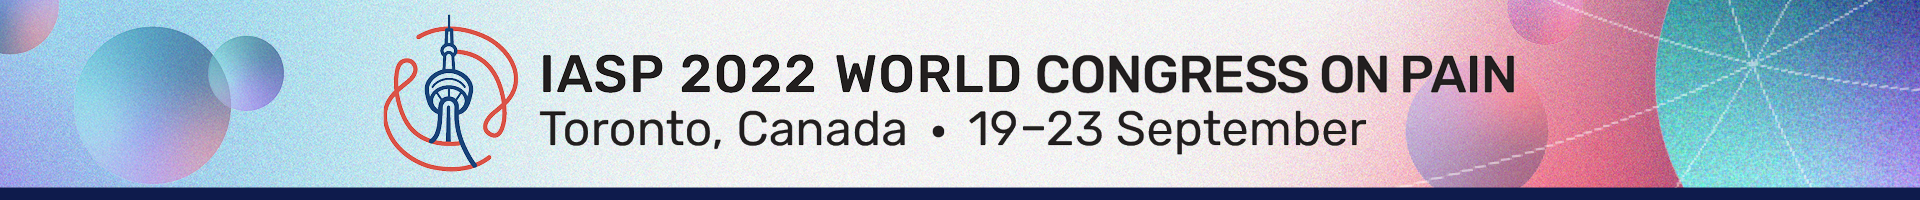 2022 IASP World Congress on Pain Event Banner